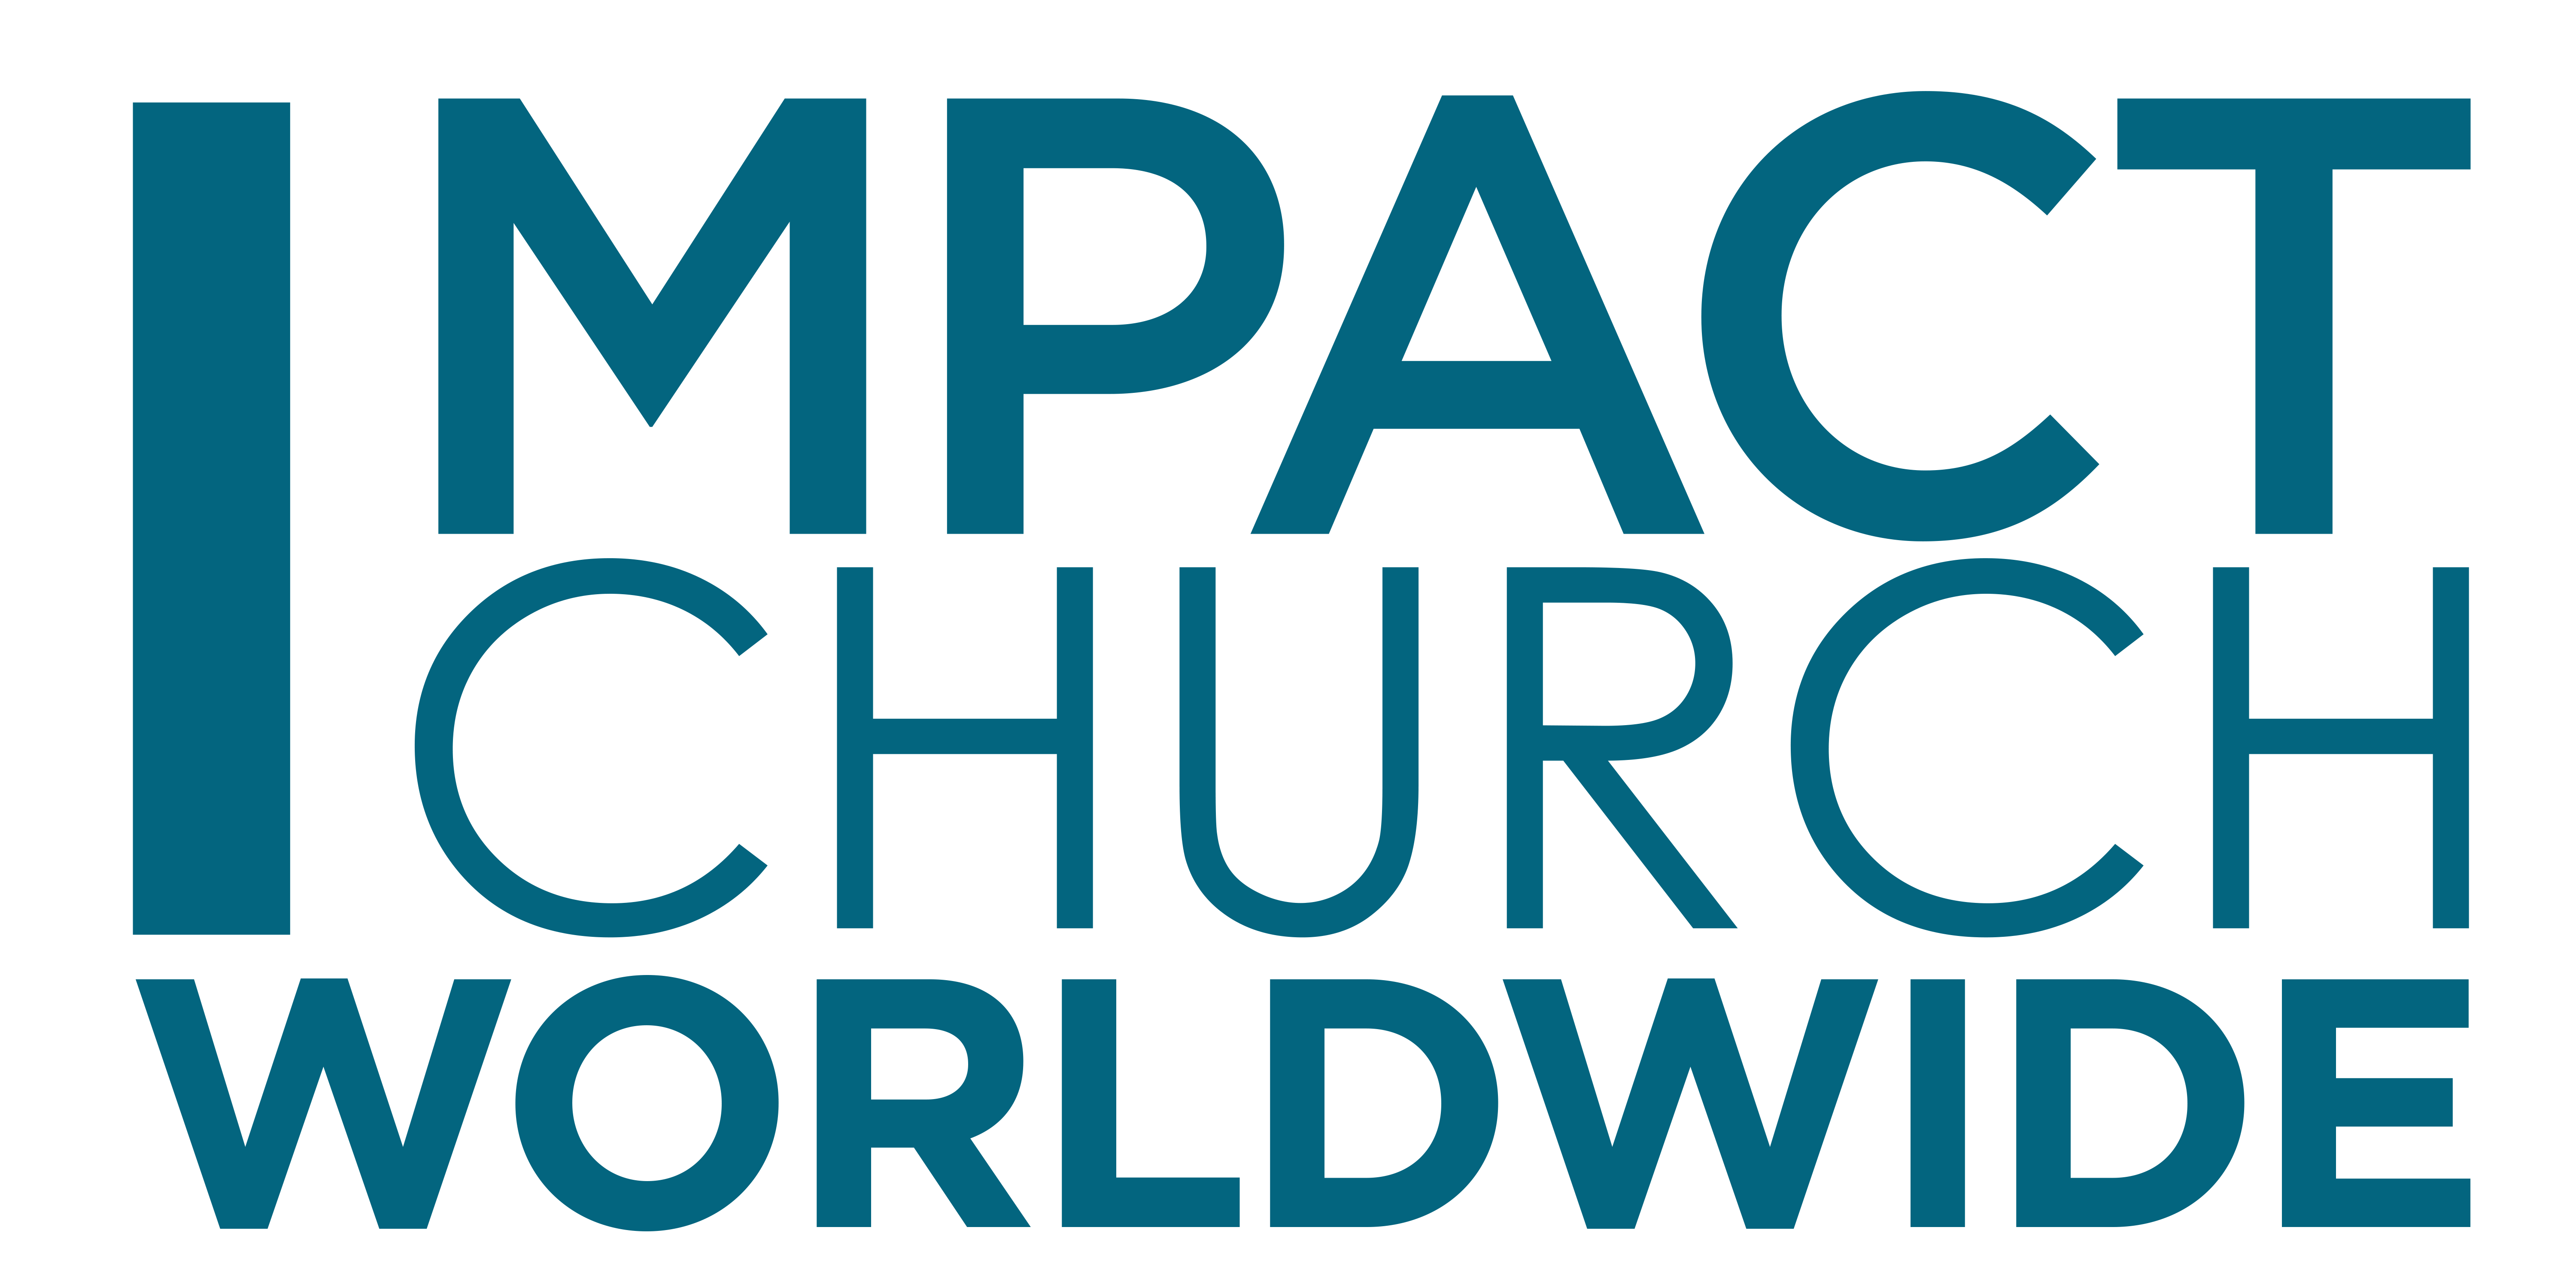 Impact Church Worldwide logo